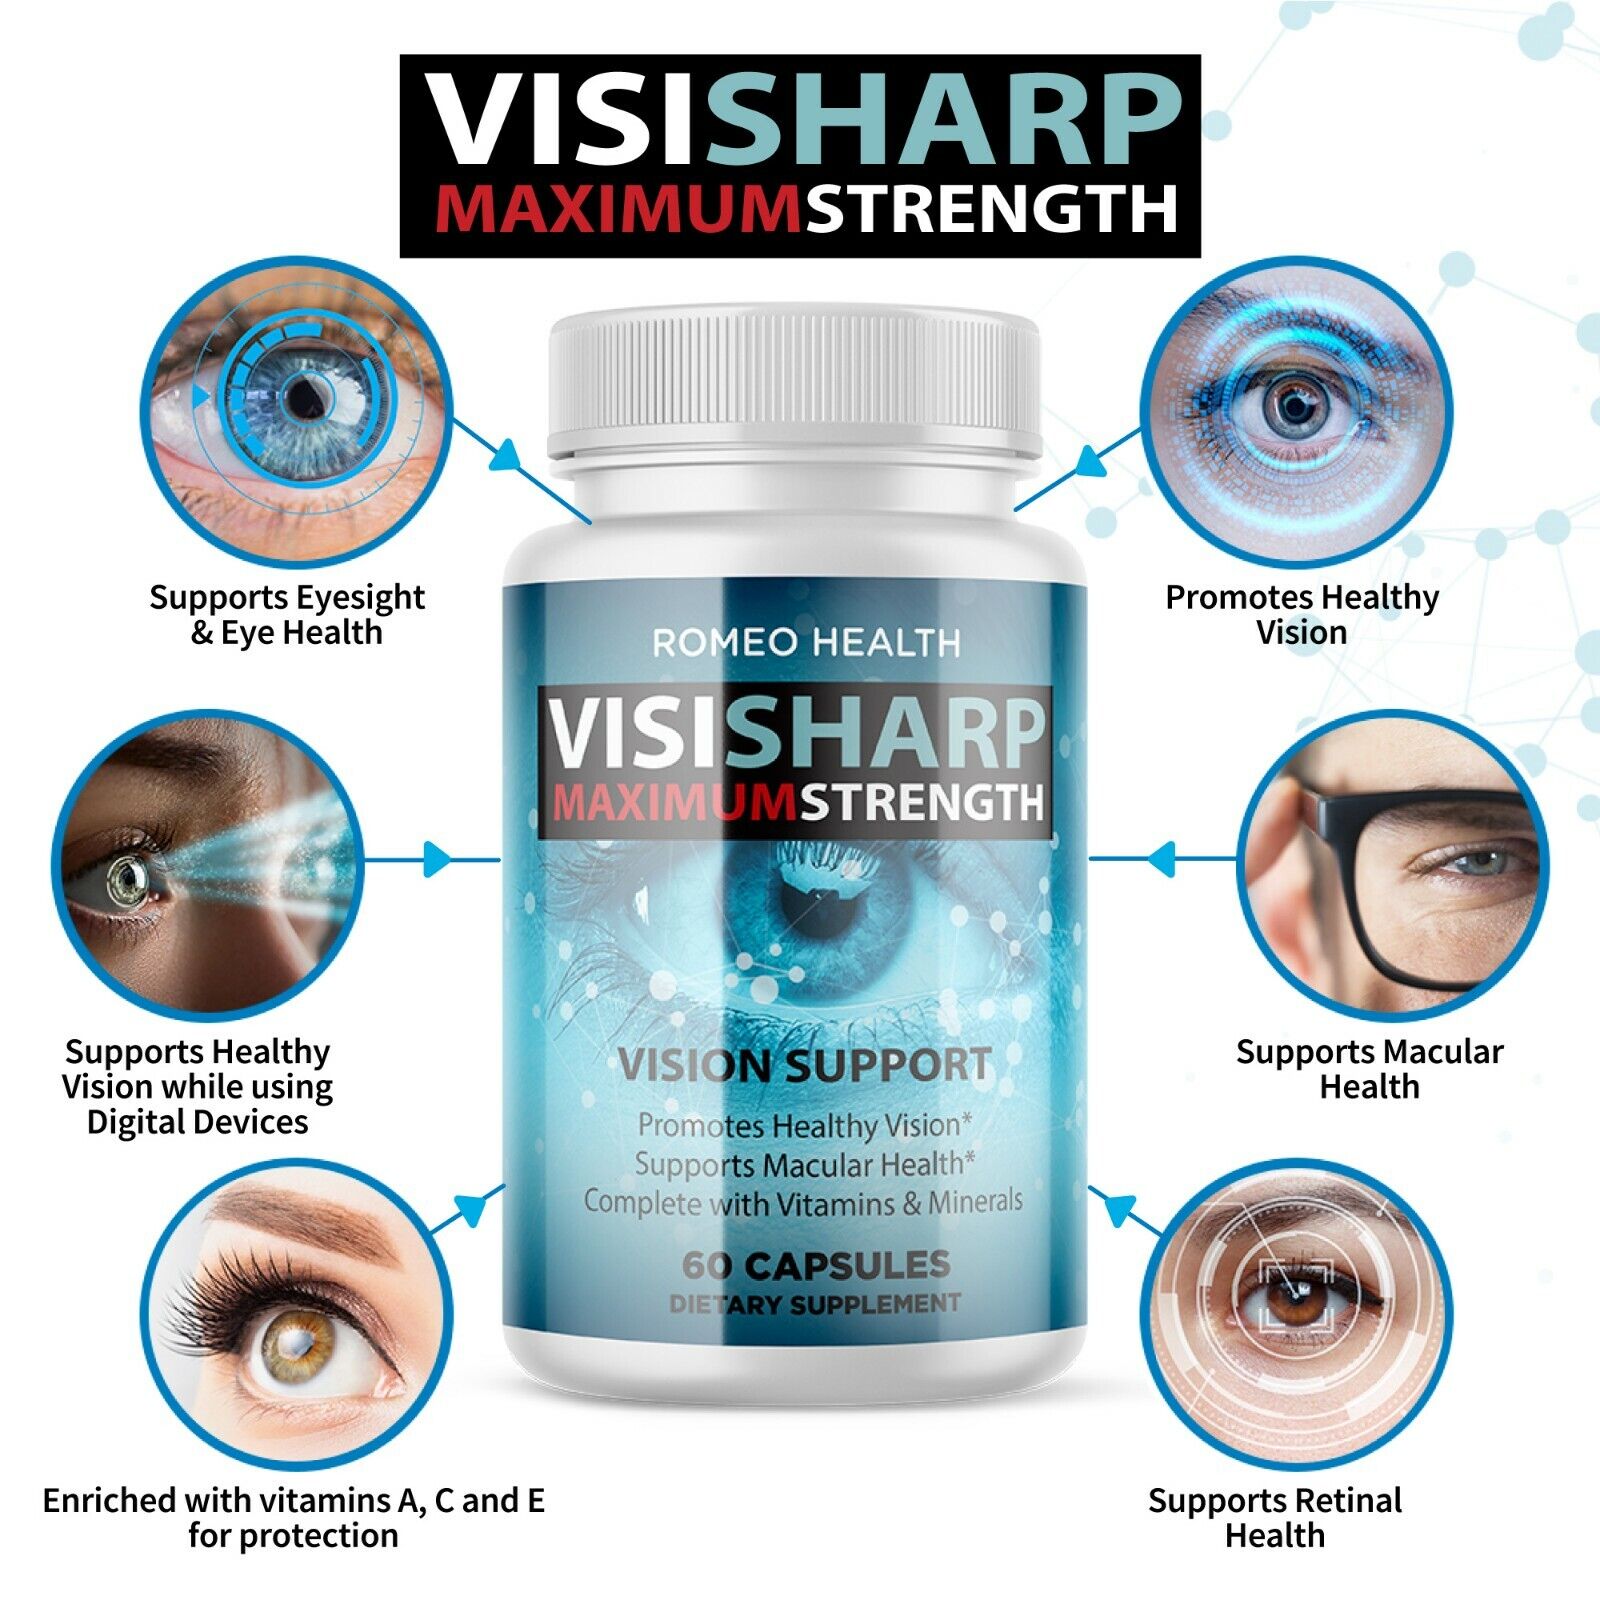 (2 Pack) VISISHARP Maximum Strength Vision Support - 60 CAPSULES